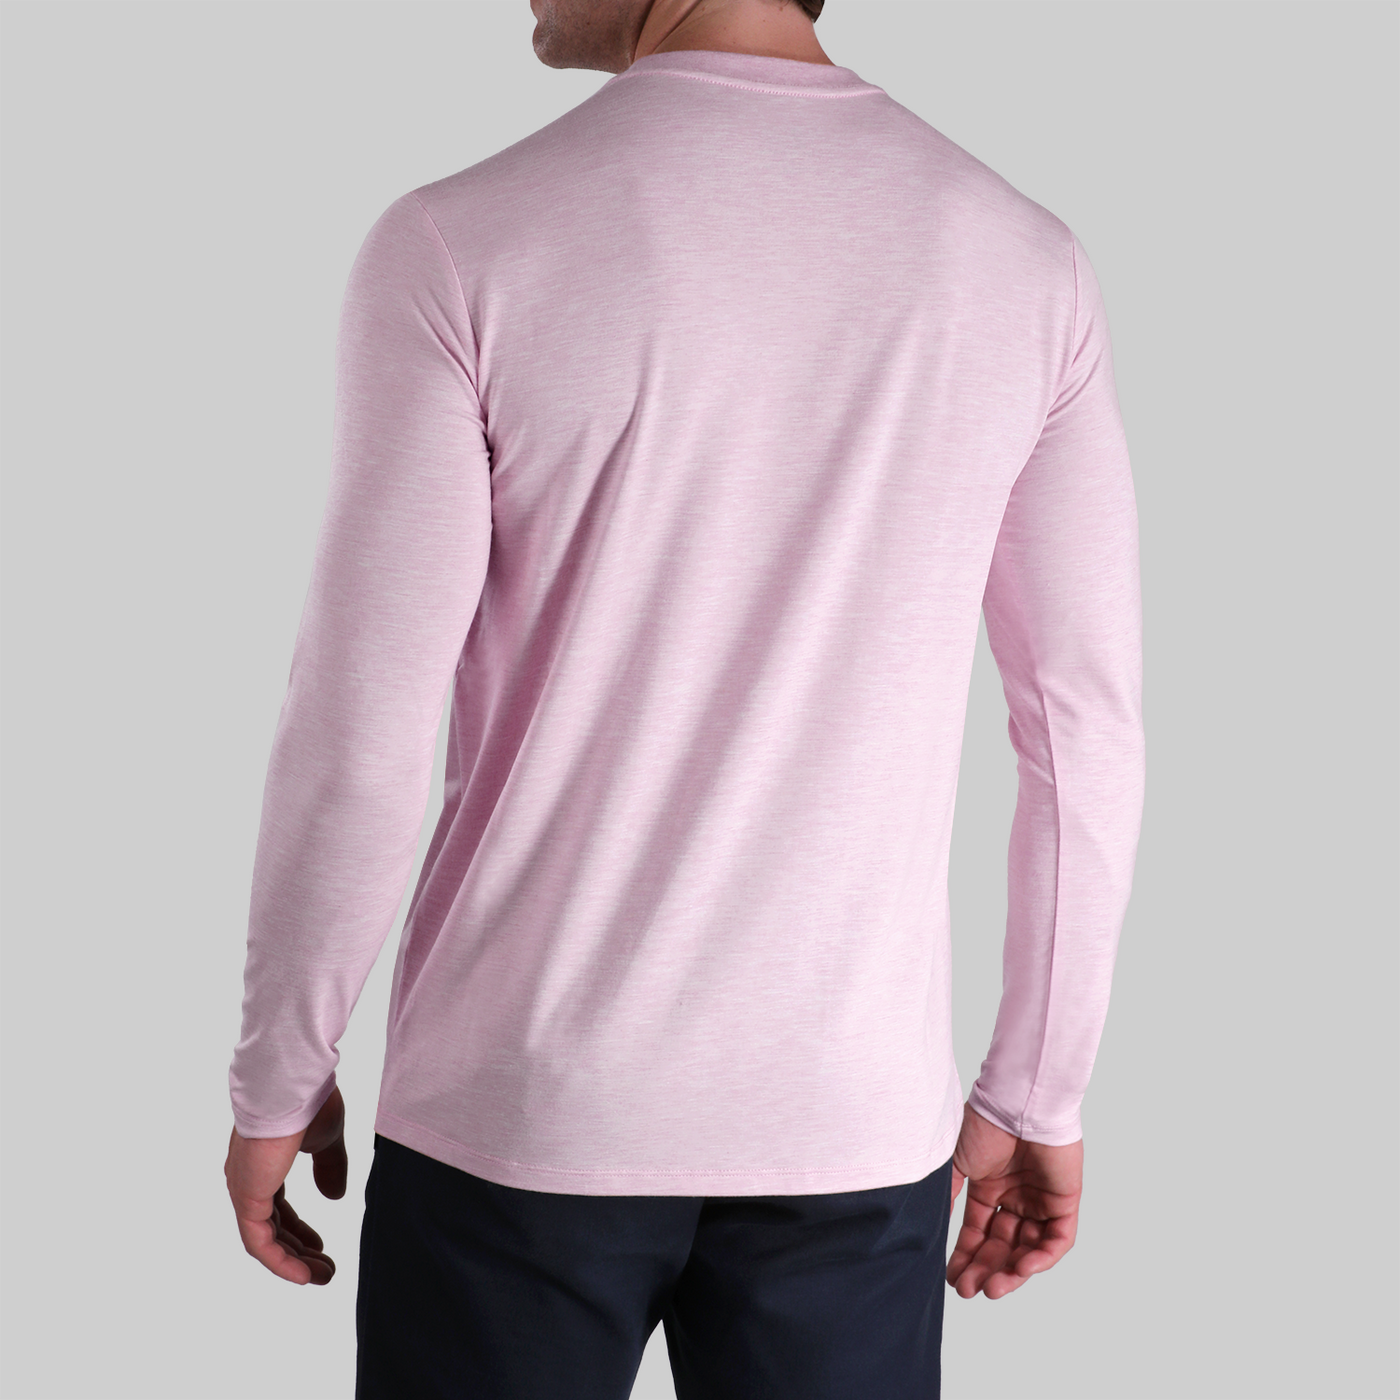 Luxury Long Sleeve Crew Tee - Heathered Pink